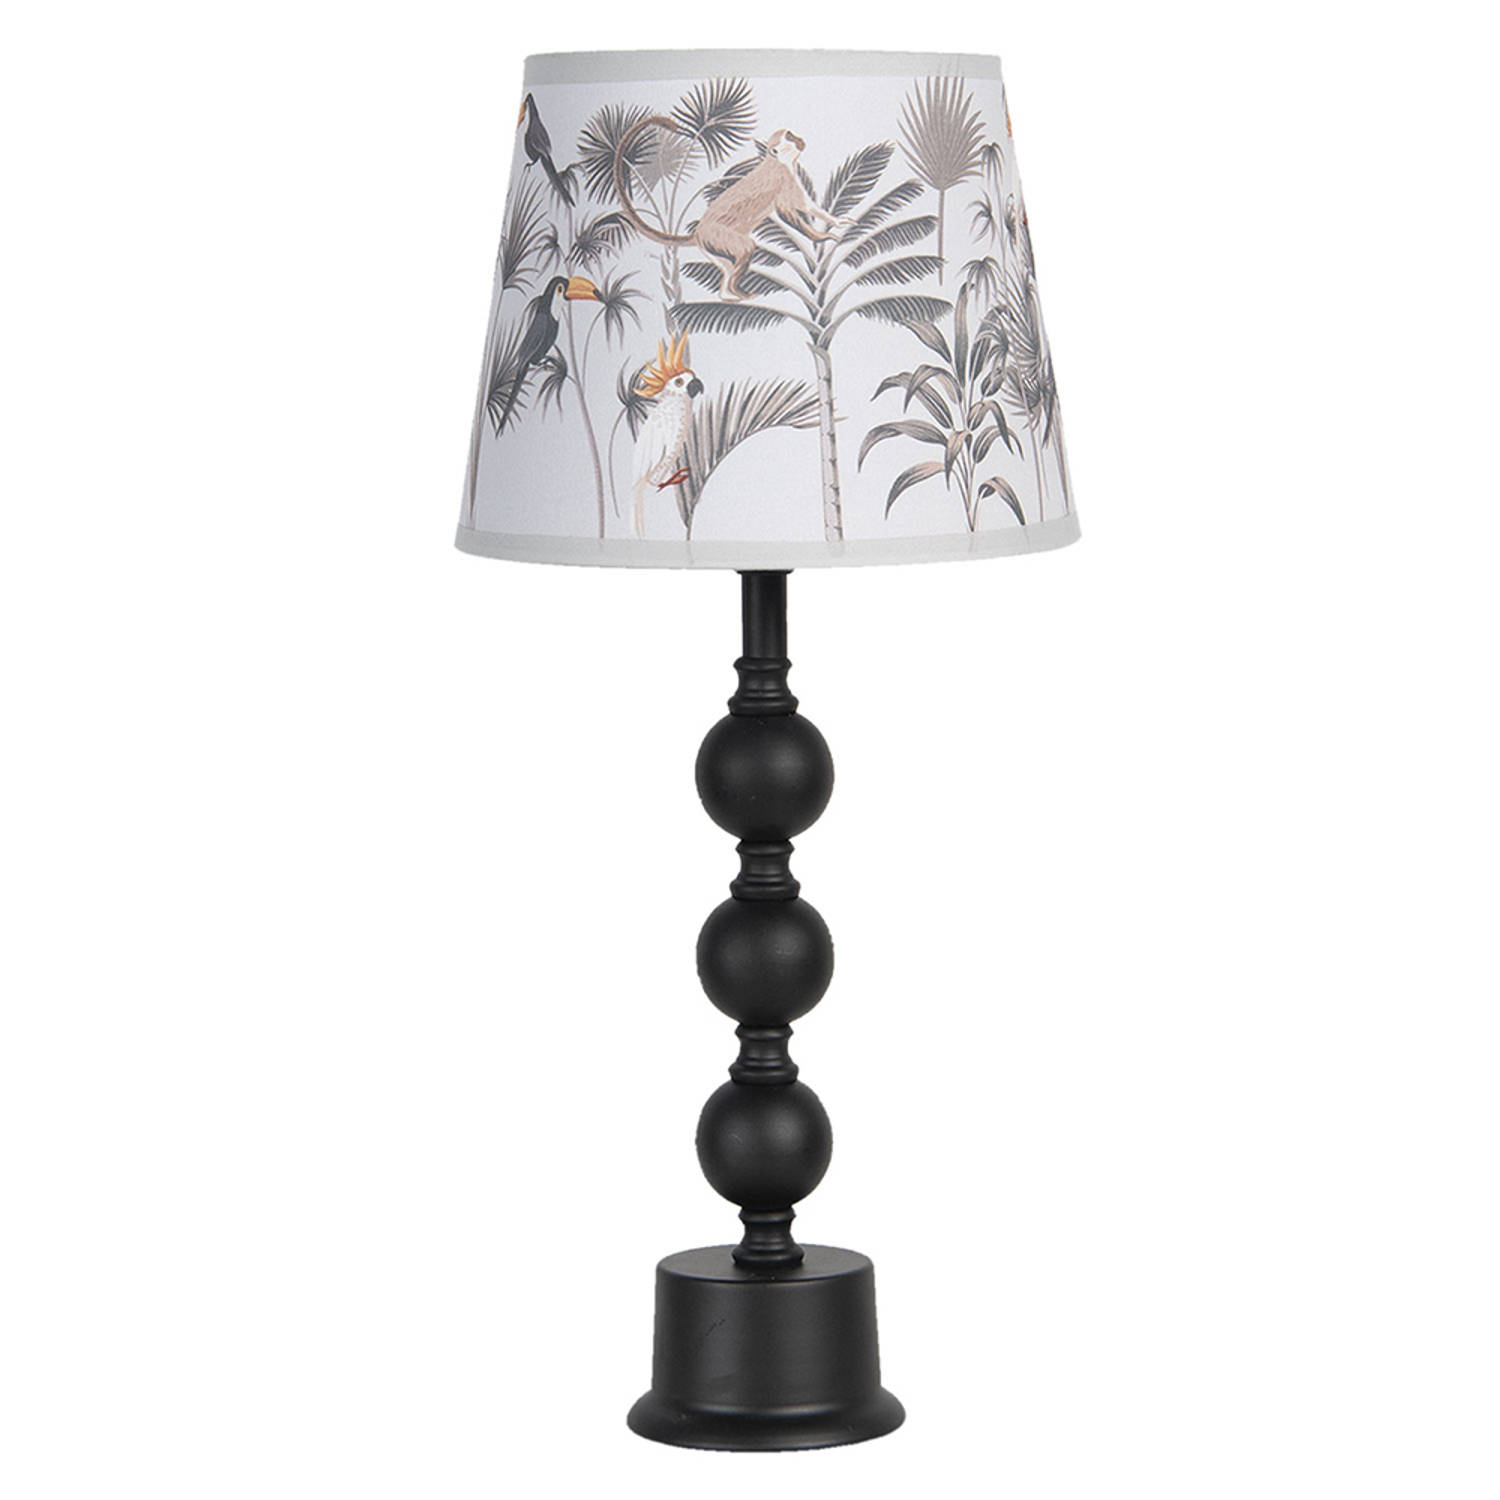 HAES DECO Tafellamp City Jungle Vogels met Apen bedrukte Lamp, Ø 24x37 cm Bureaulamp, Sfeerlamp, Nac